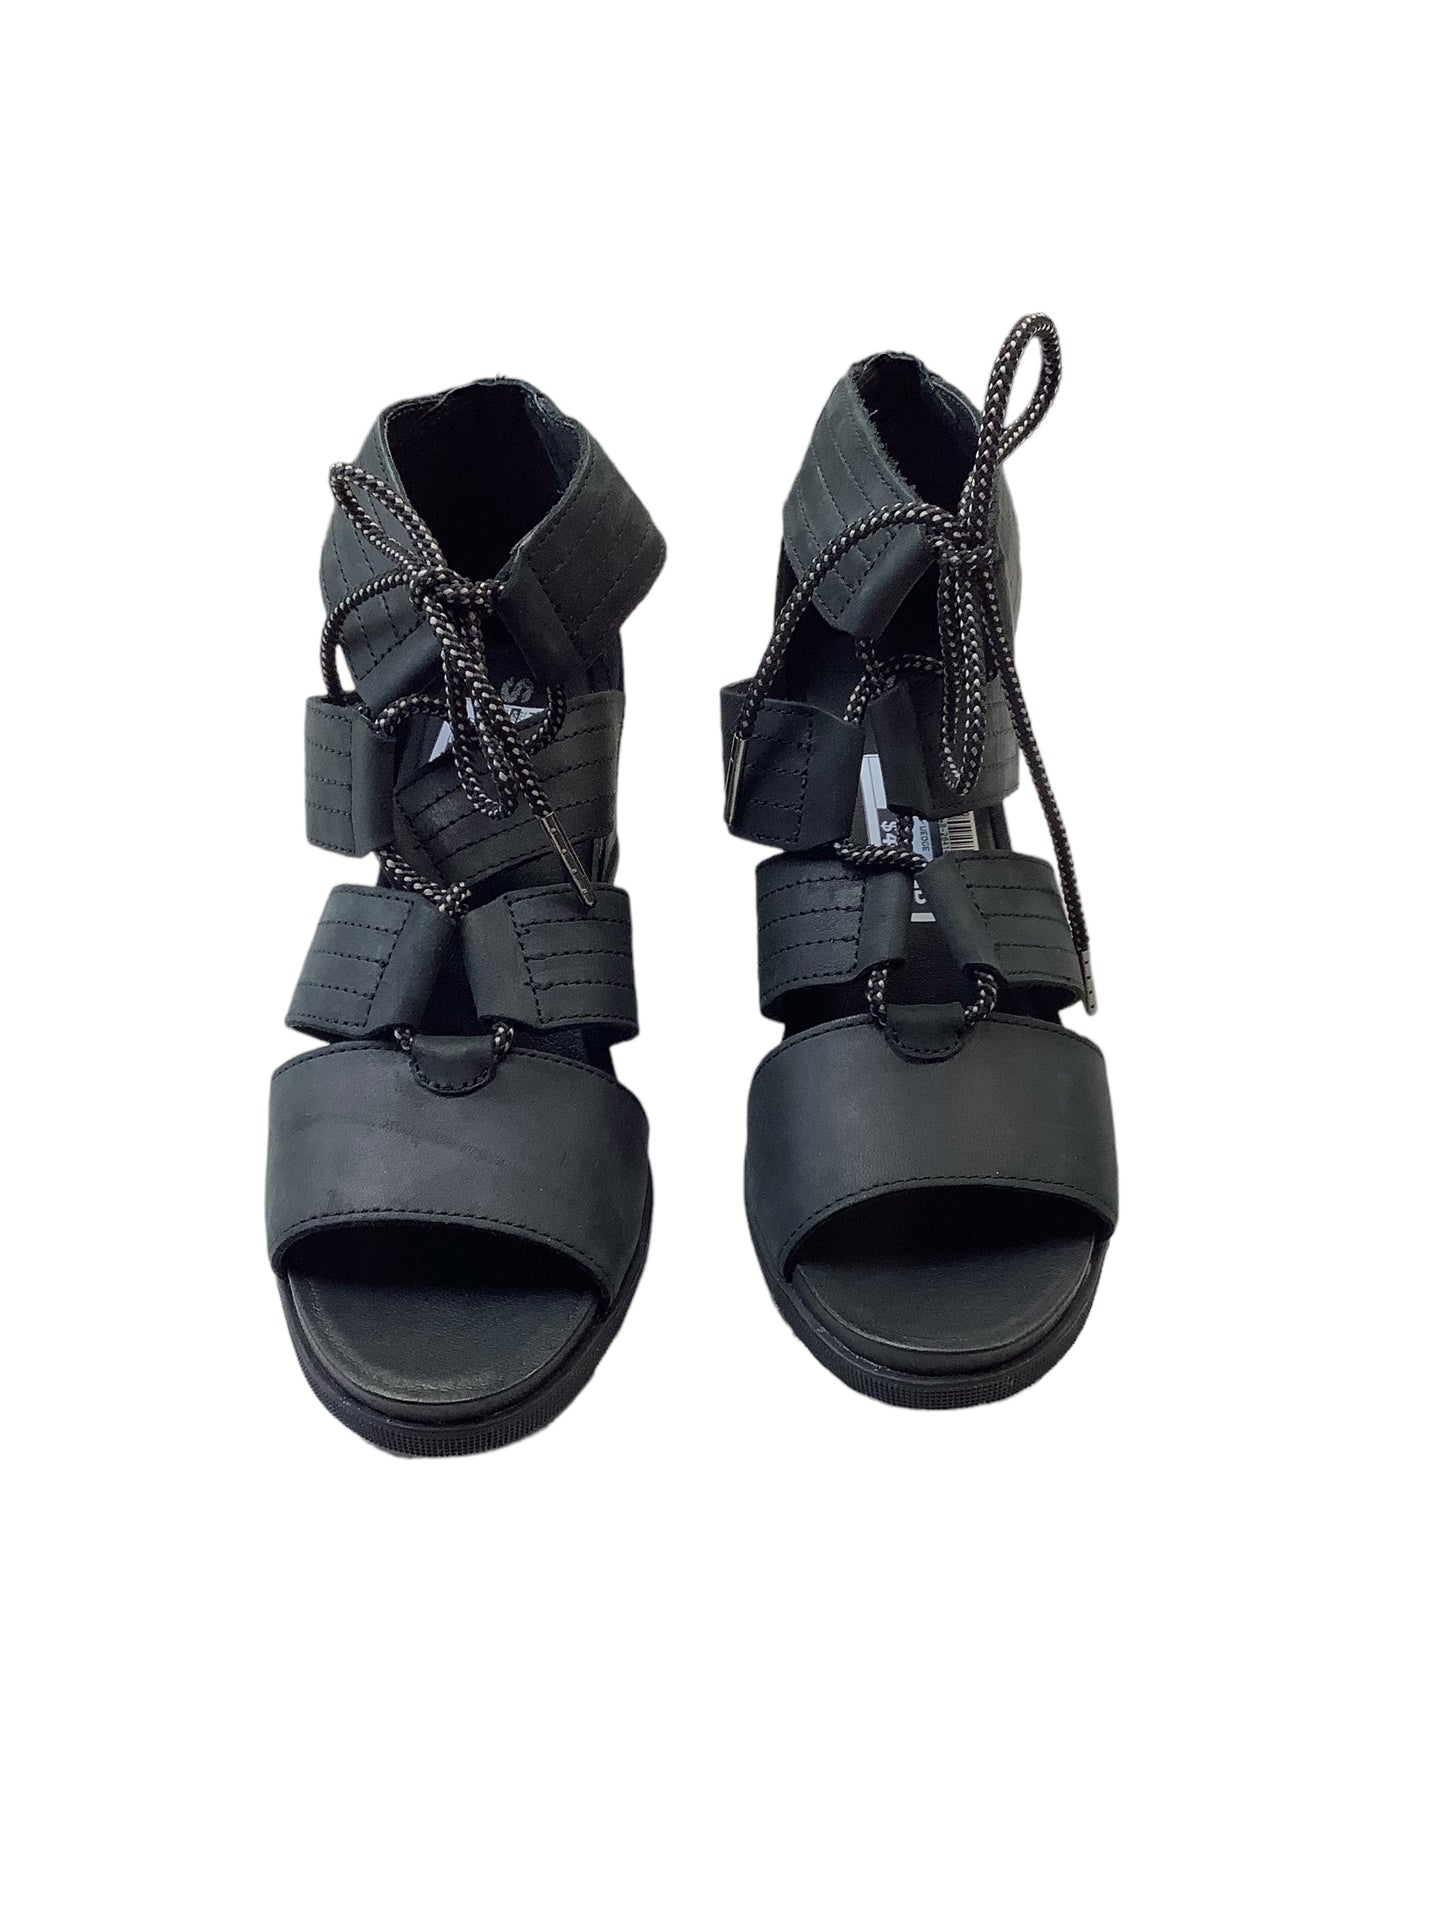 Sandals Heels Wedge By Sorel  Size: 11